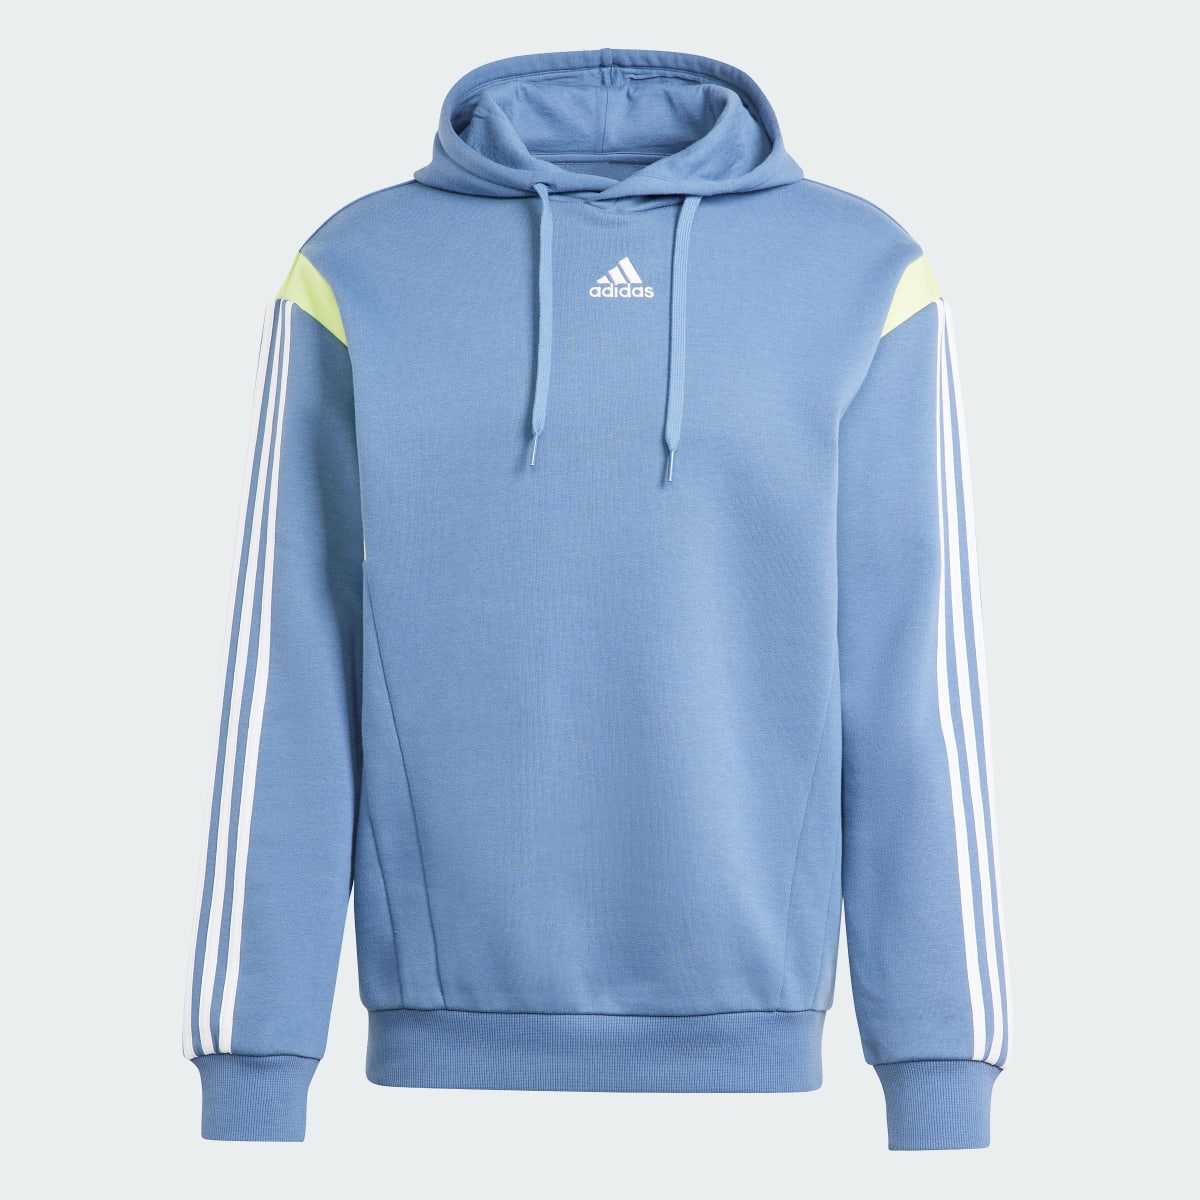 Adidas Sweatshirt com Capuz. 5